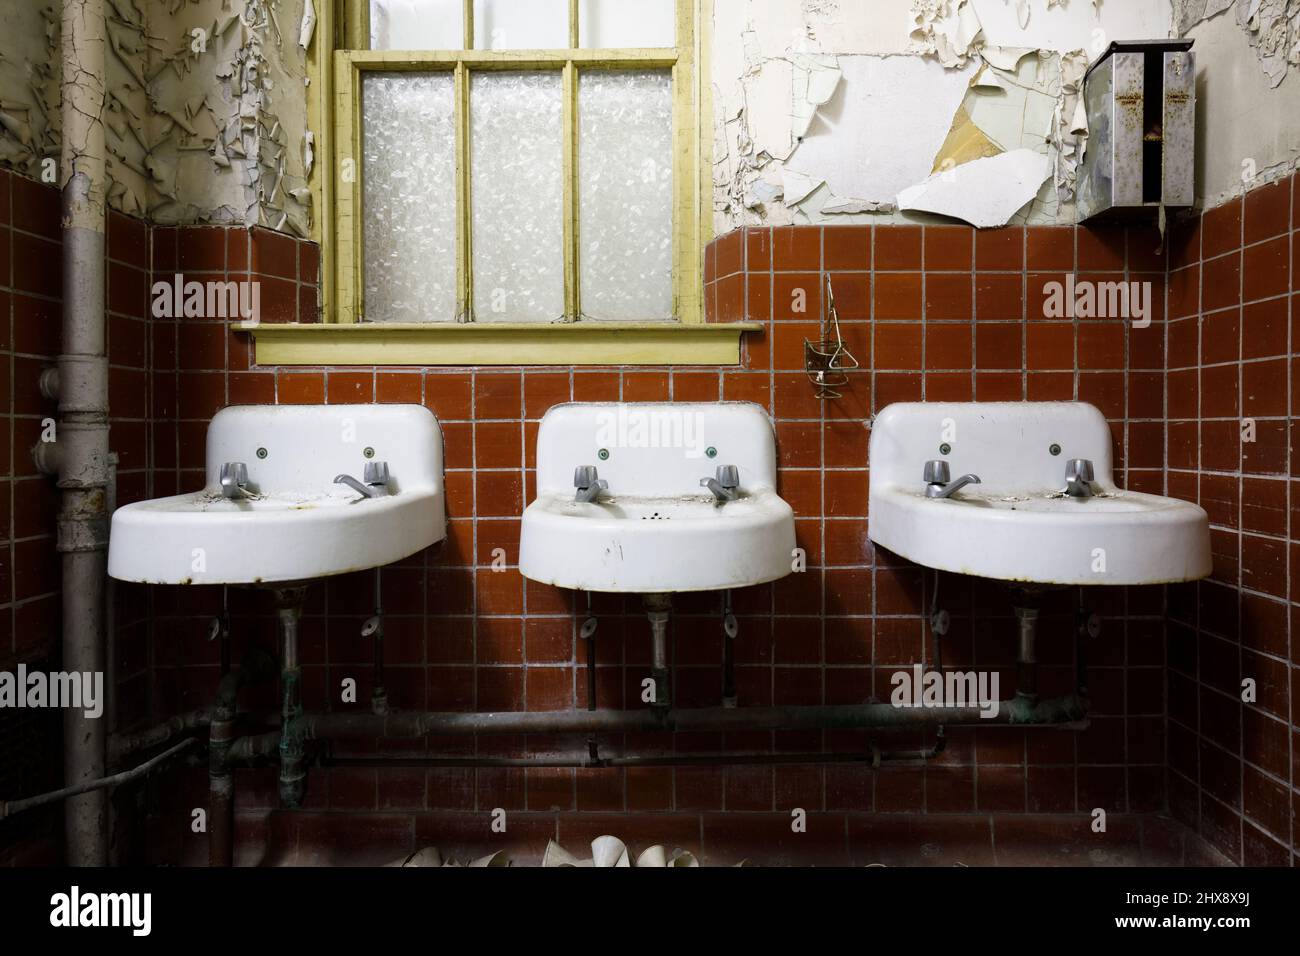 Vintage bathrooms sinks. Stock Photo